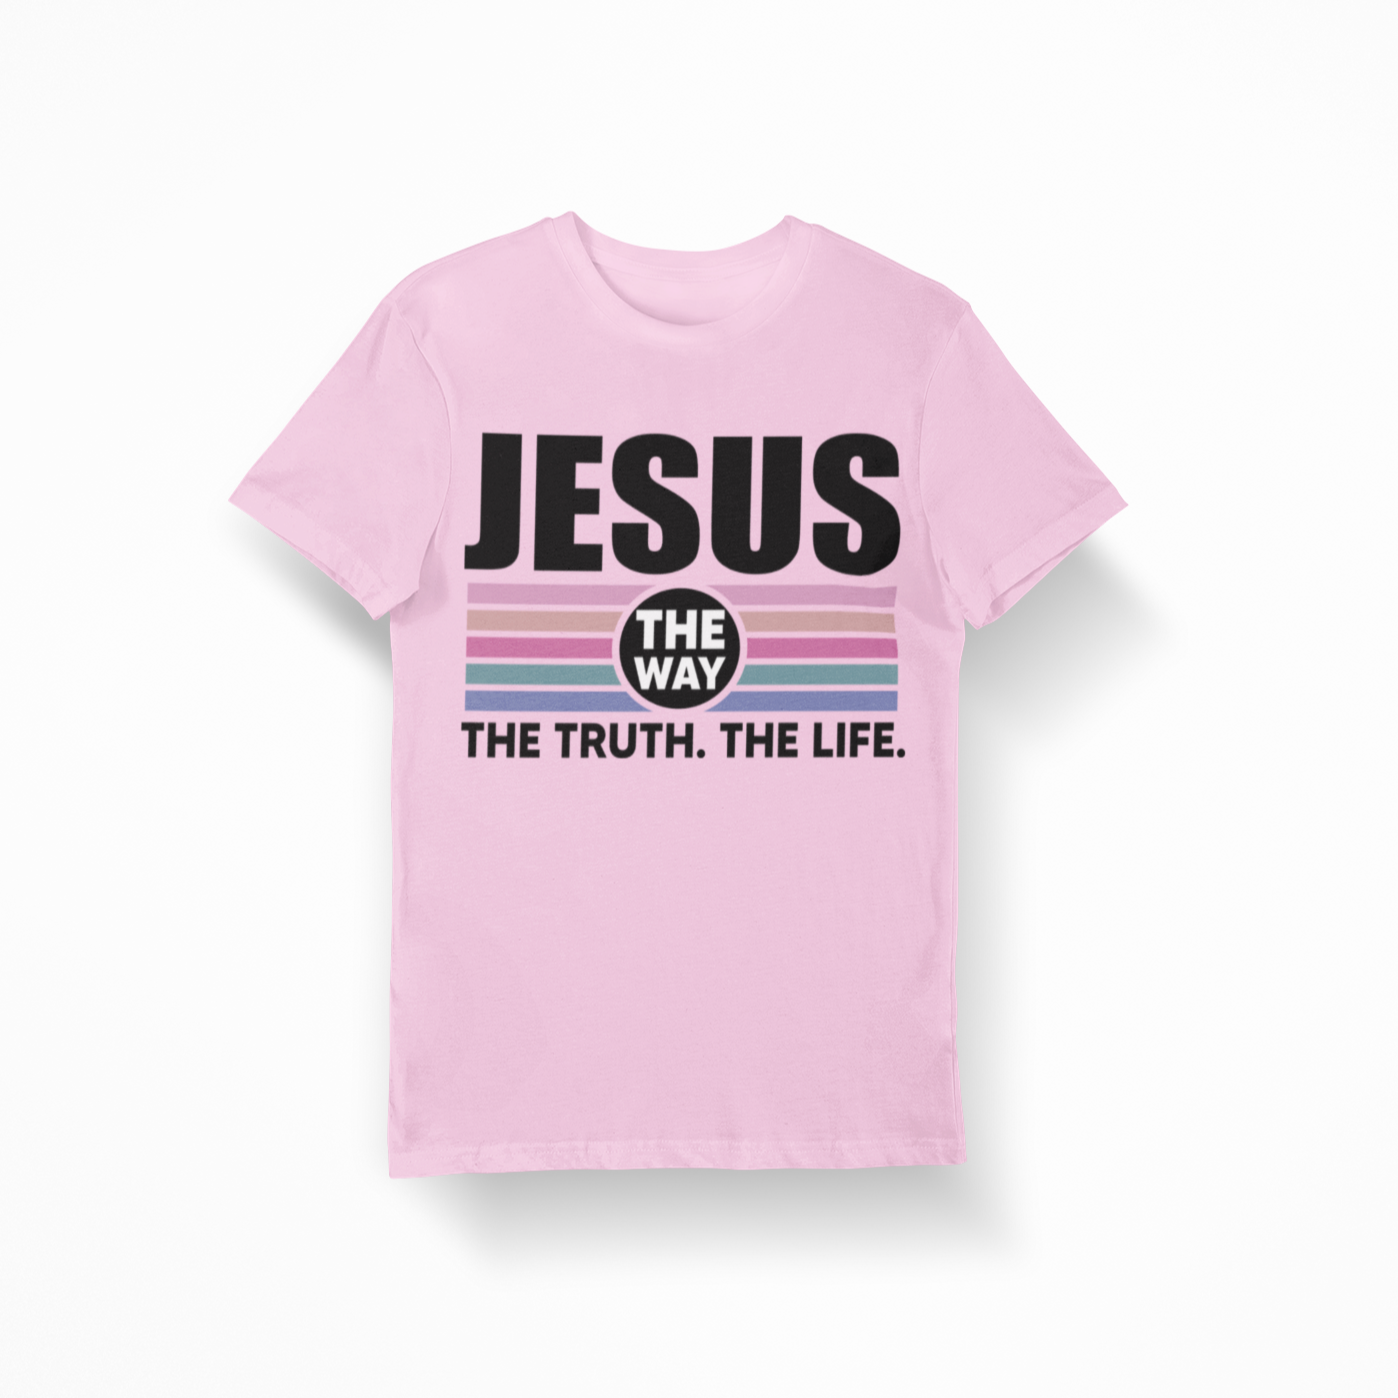 JESUS IS THE WAY T-SHIRT